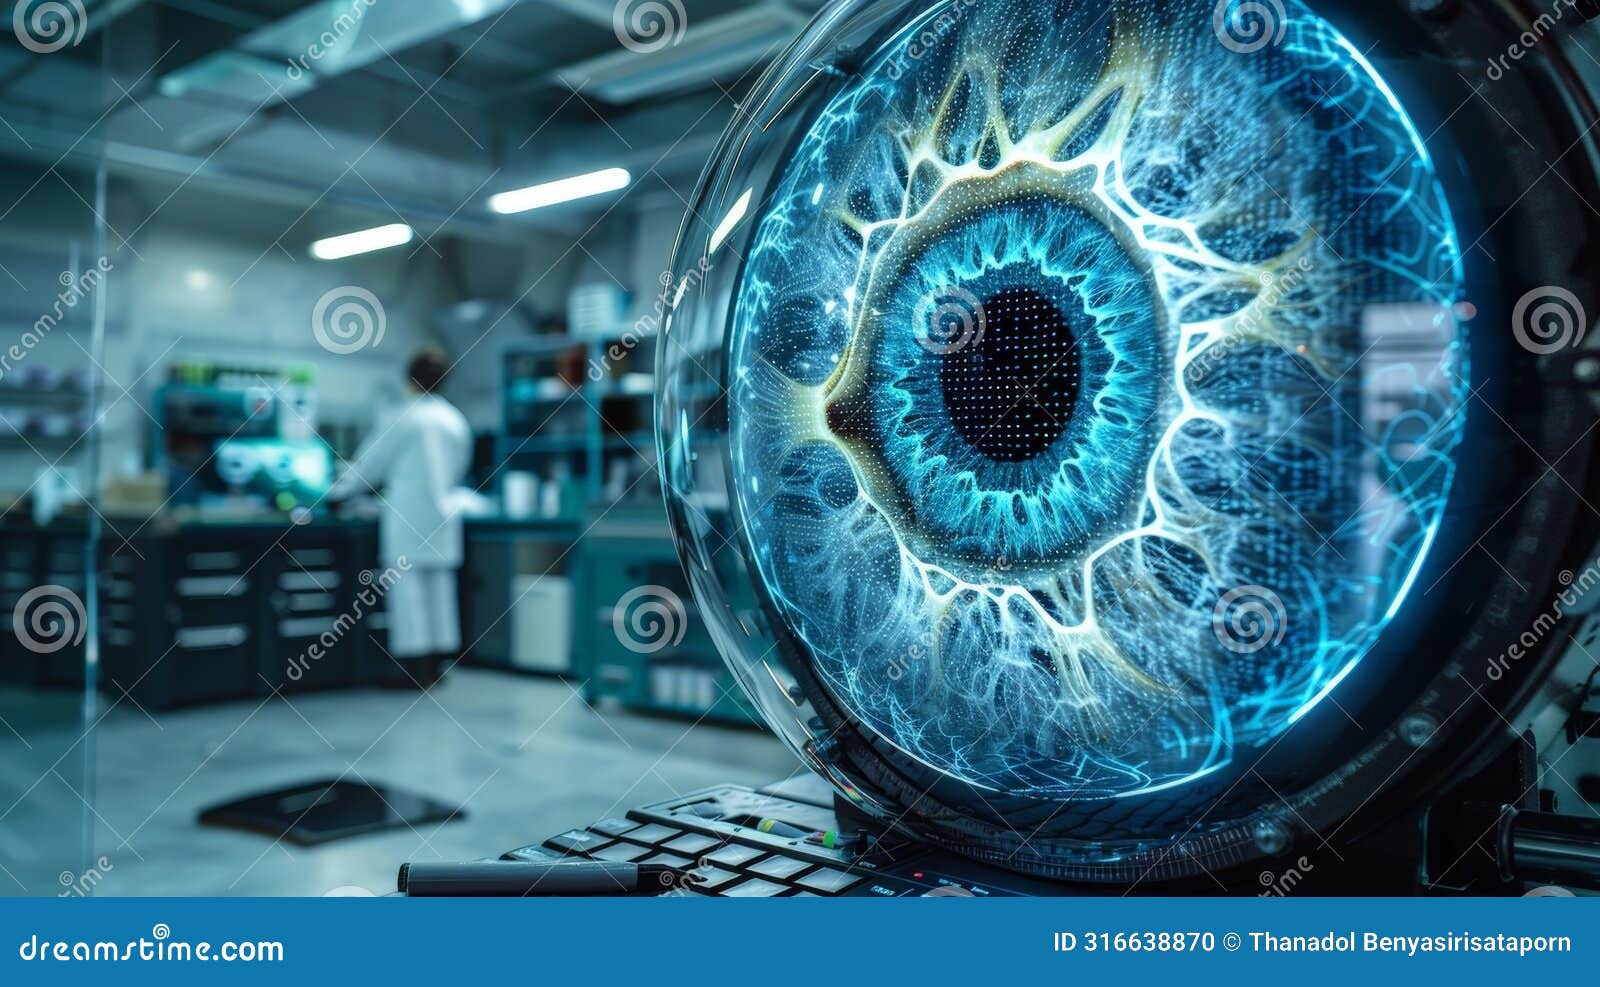 advanced biomedical lab developing robotic human eye